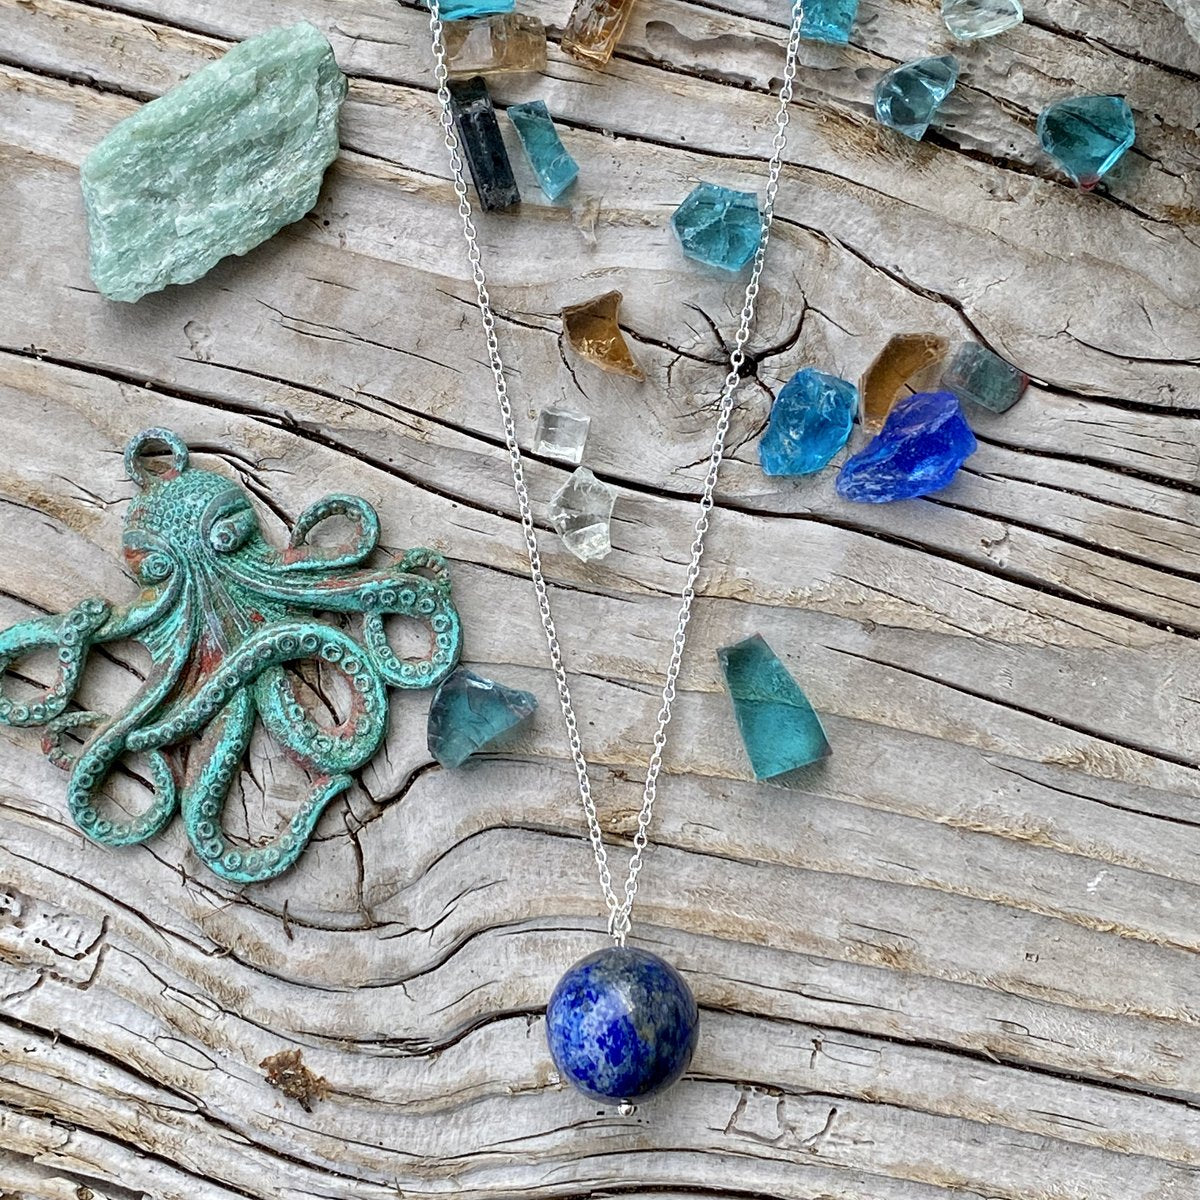 Blue Marble Ocean Blue Gratitude Silver Necklace with Lapis Lazuli Earth Symbol Pendant